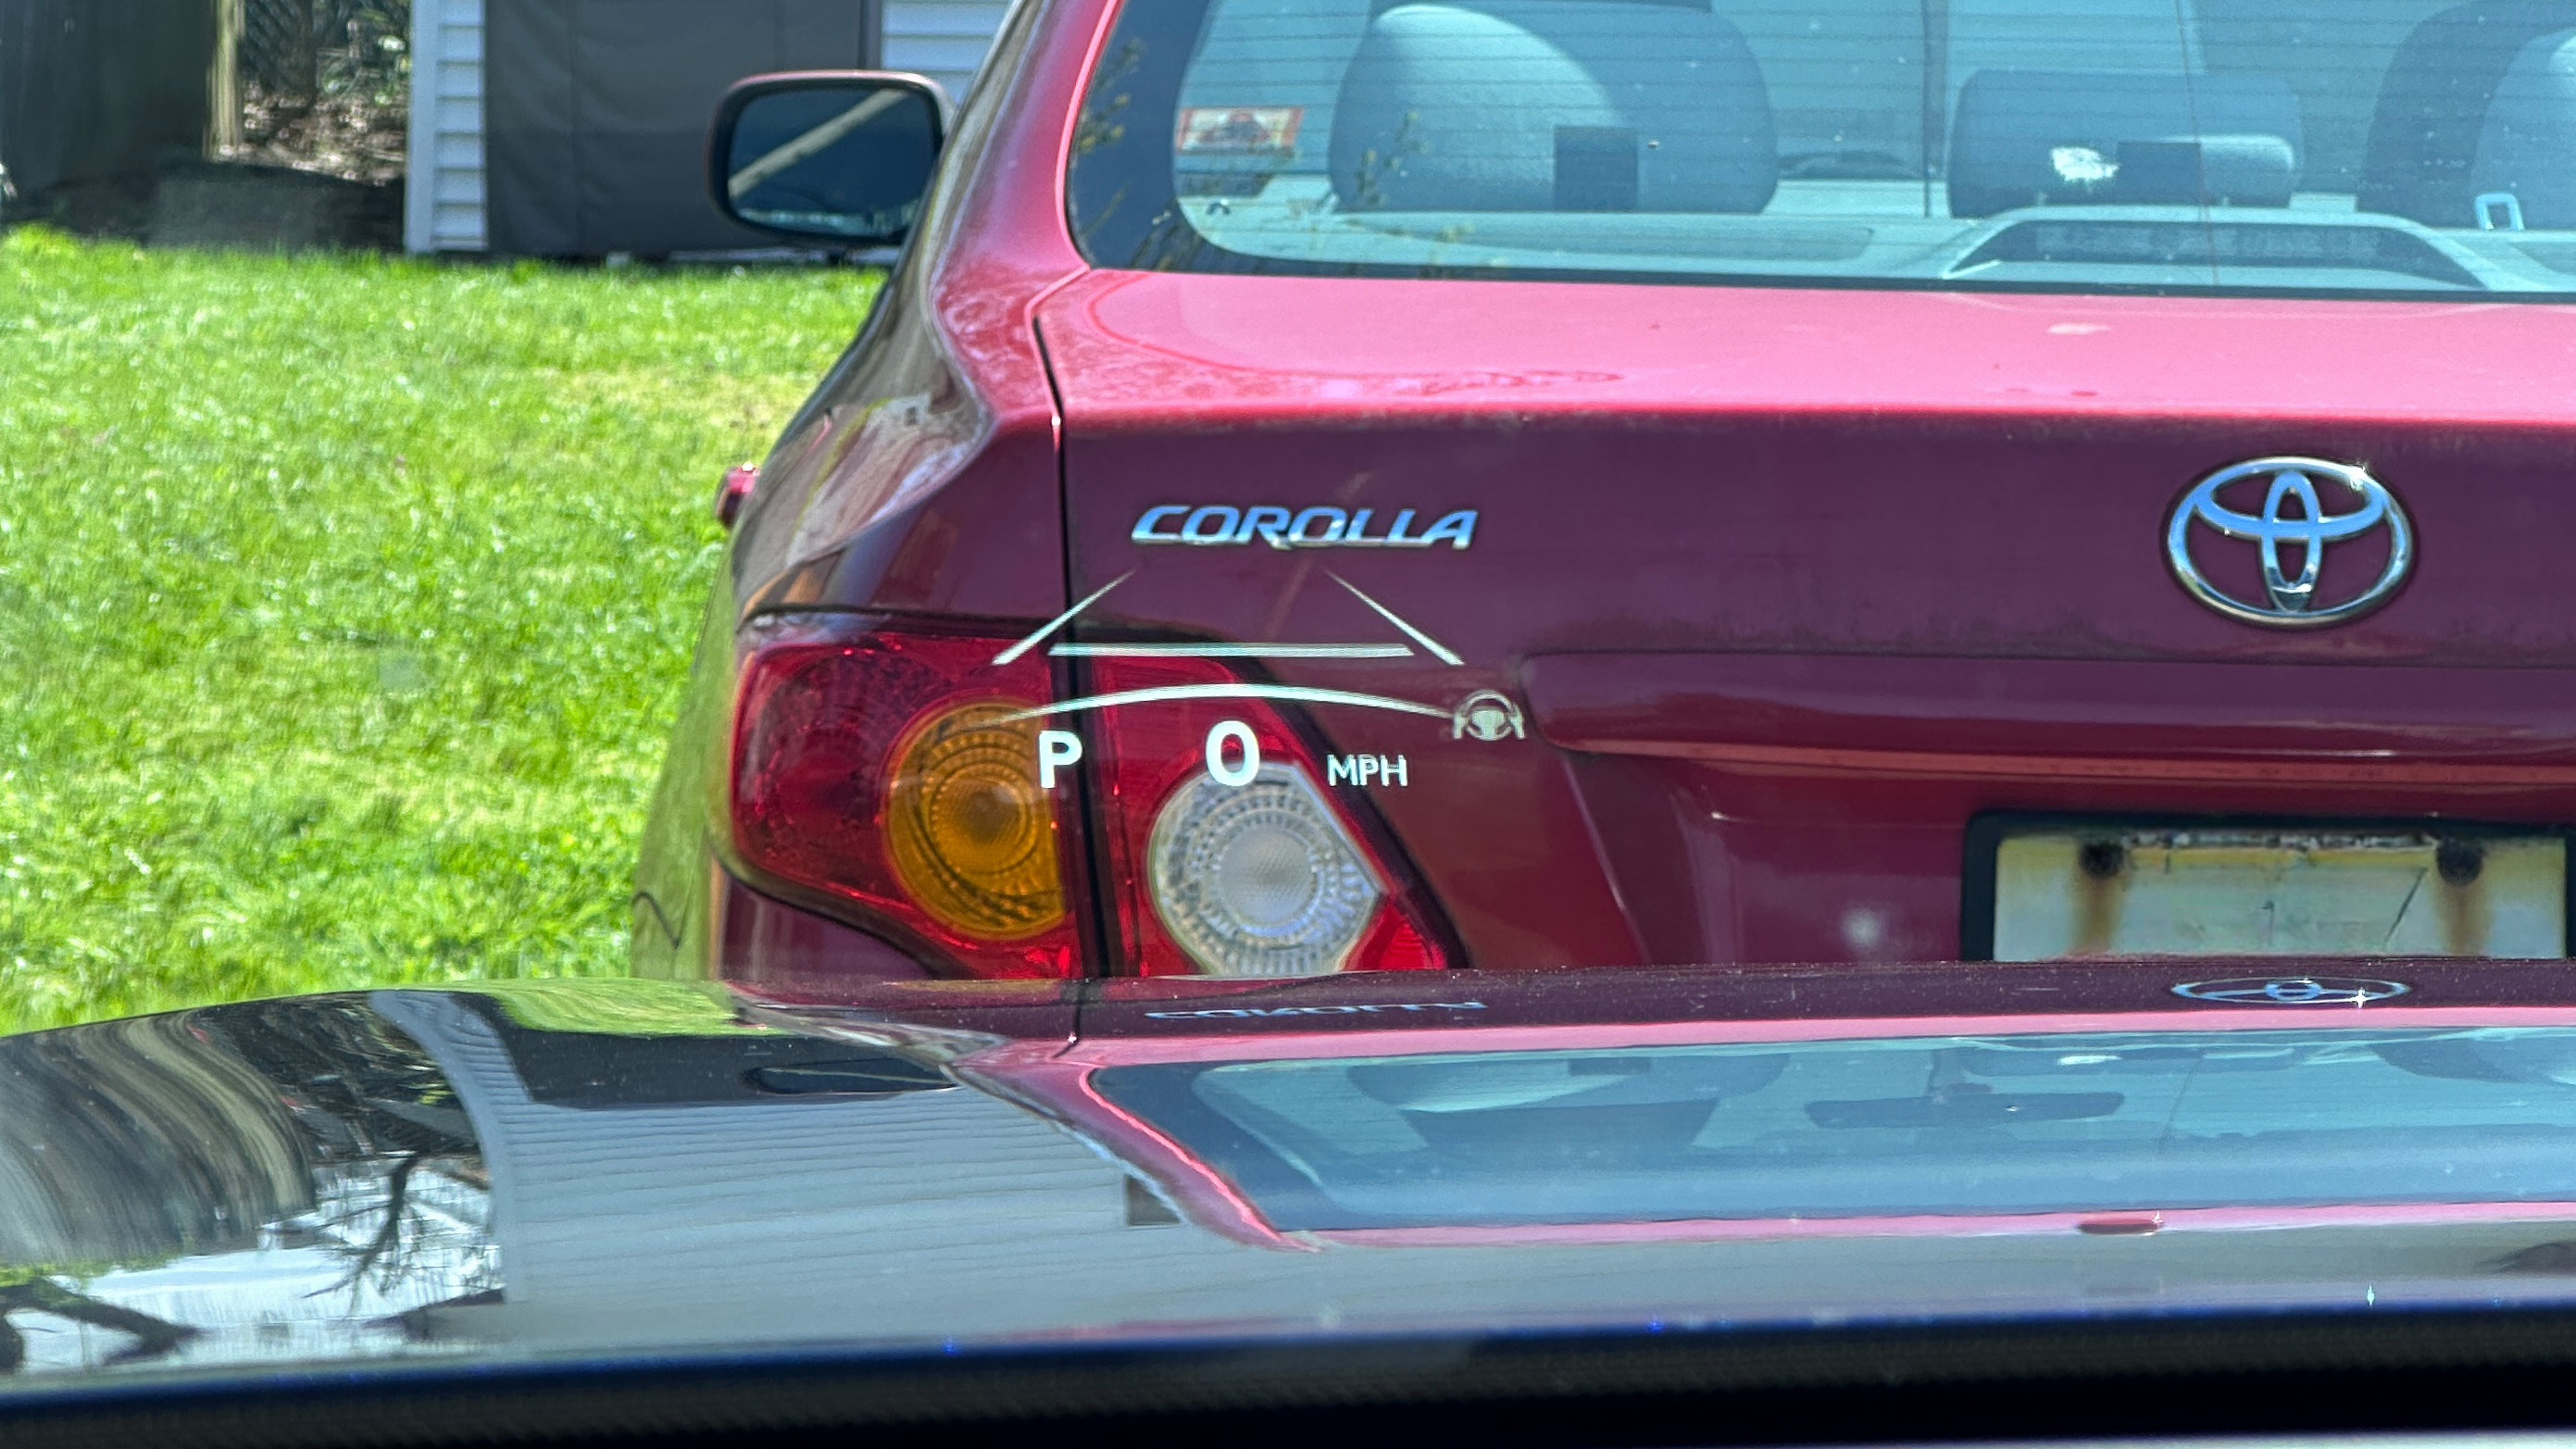 Lexus TX550H+ HUD shown in the windshield.